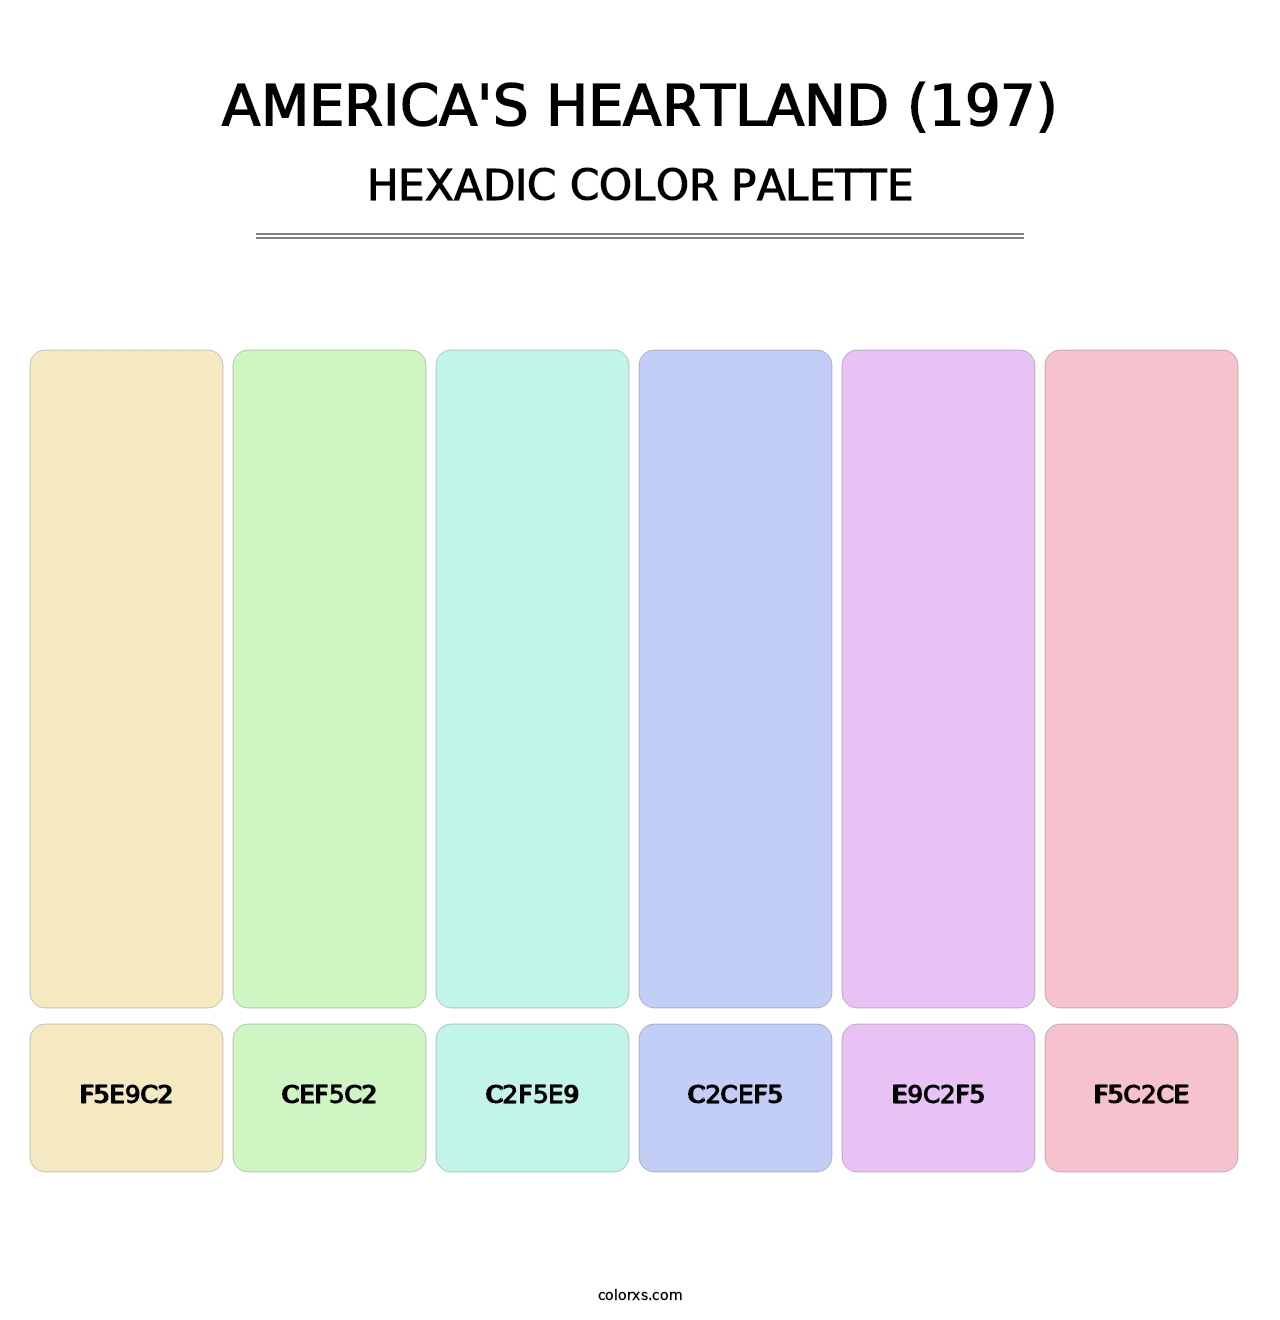 America's Heartland (197) - Hexadic Color Palette